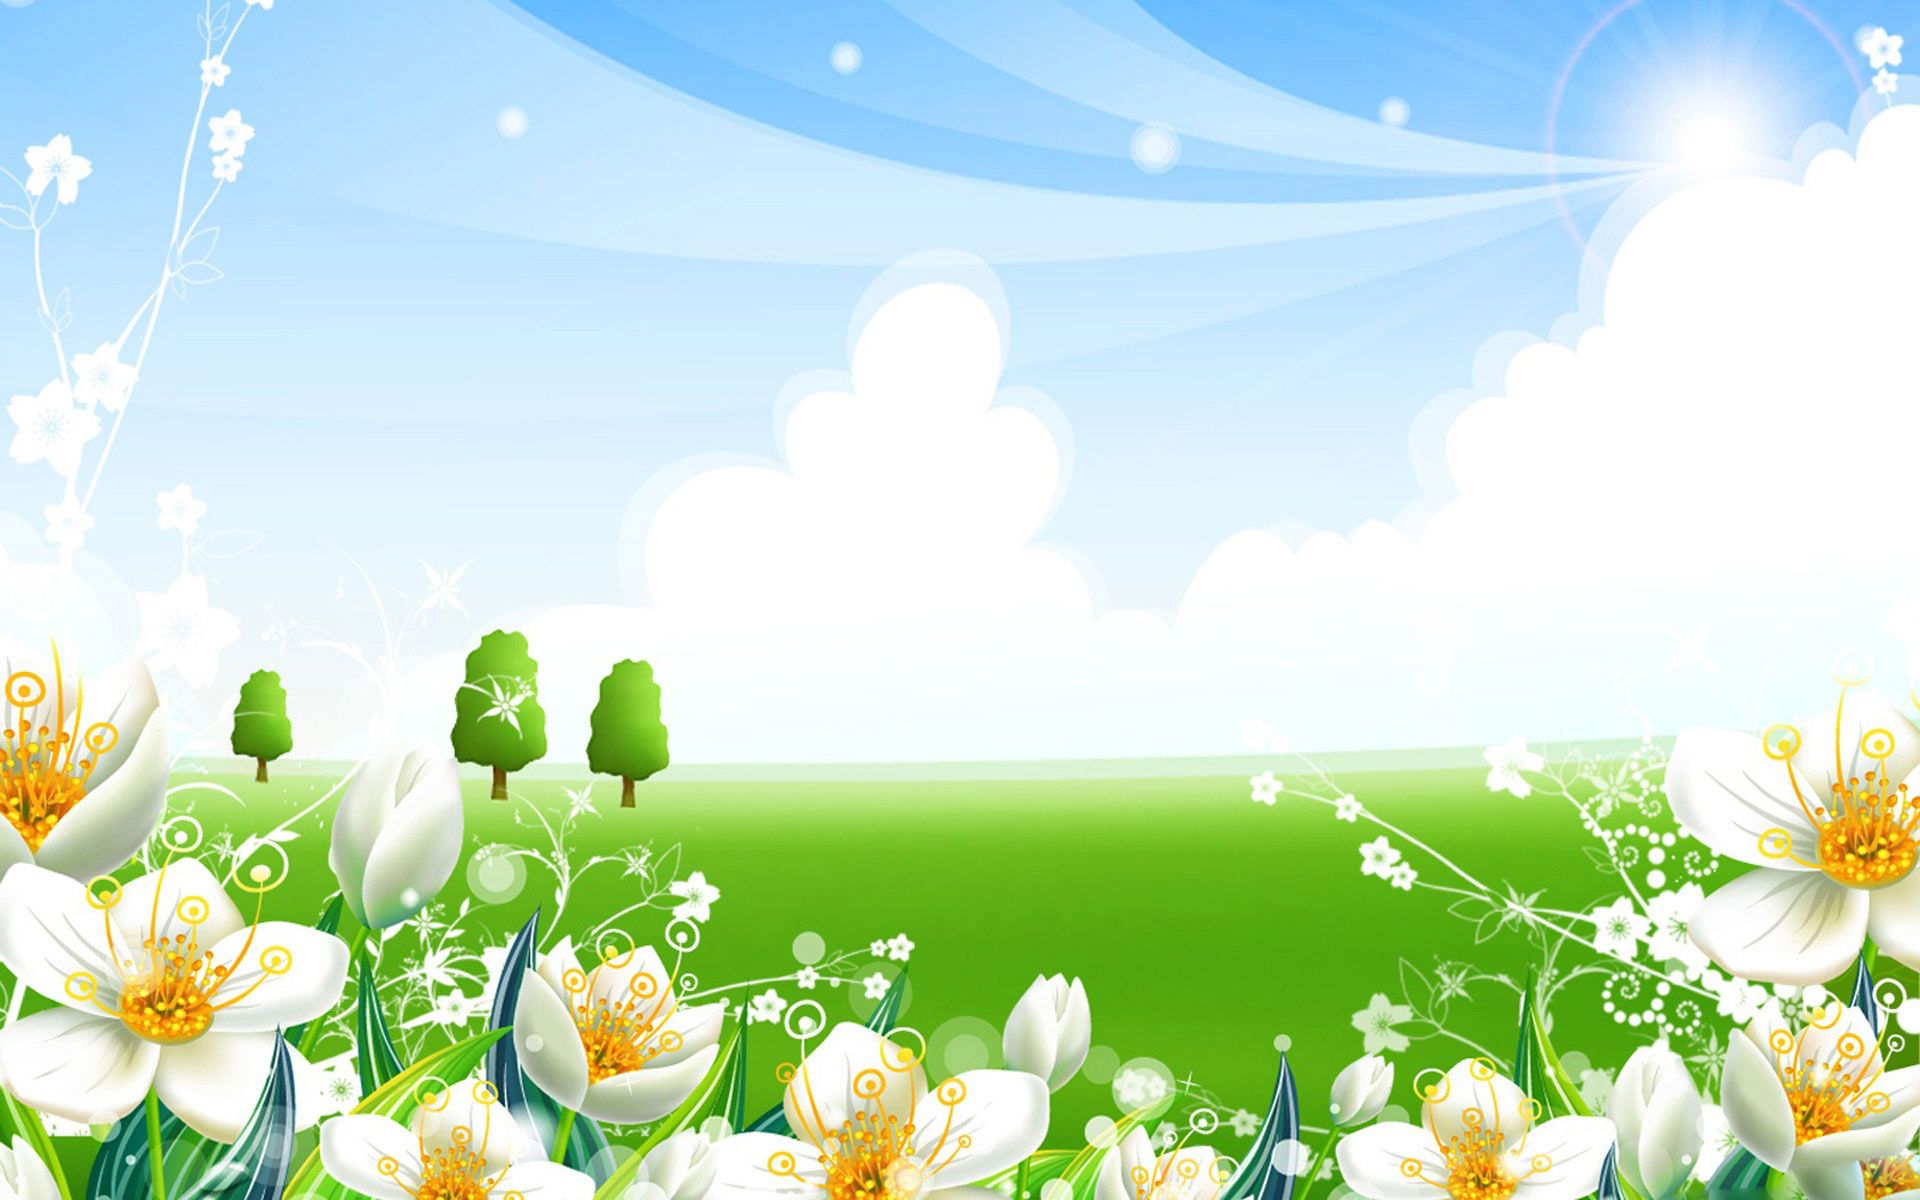 Flower Power Desktop Background. Beautiful Widescreen Desktop Wallpaper, Desktop Wallpaper and Naruto Desktop Background